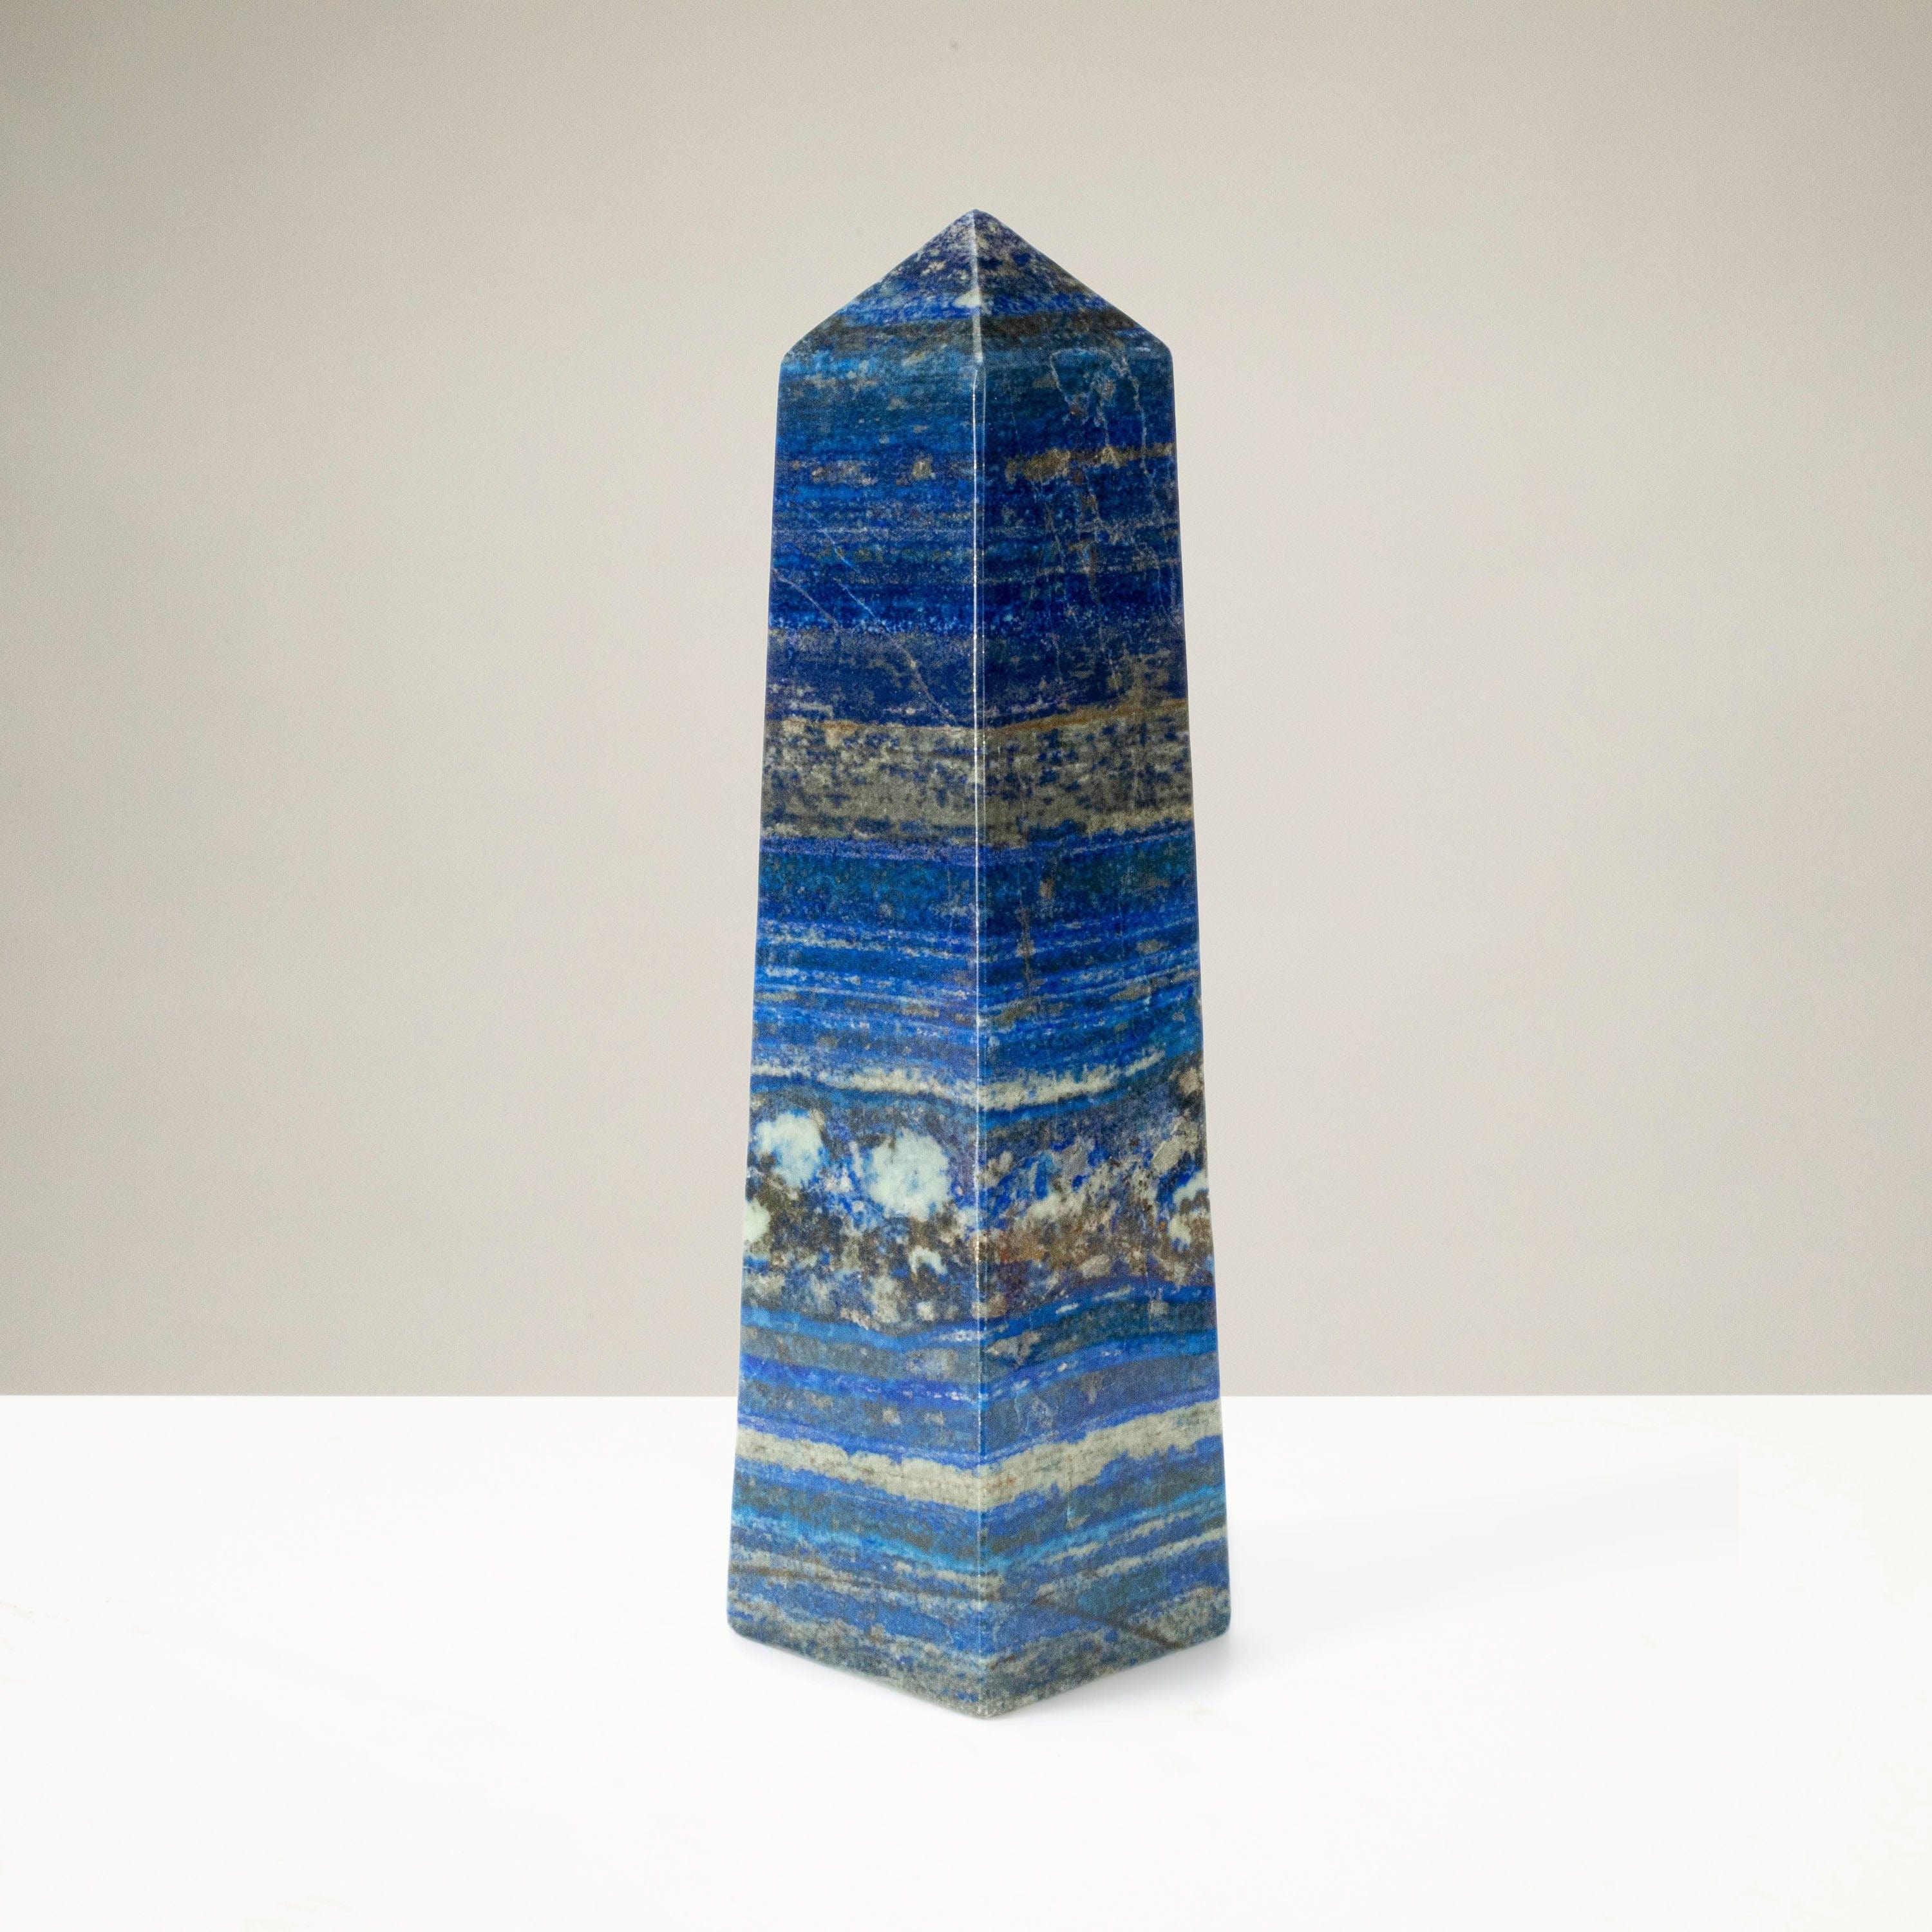 Kalifano Lapis Lapis Lazuli Polished Obelisk from Afghanistan - 14.5" / 15 lbs LPOB13800.001